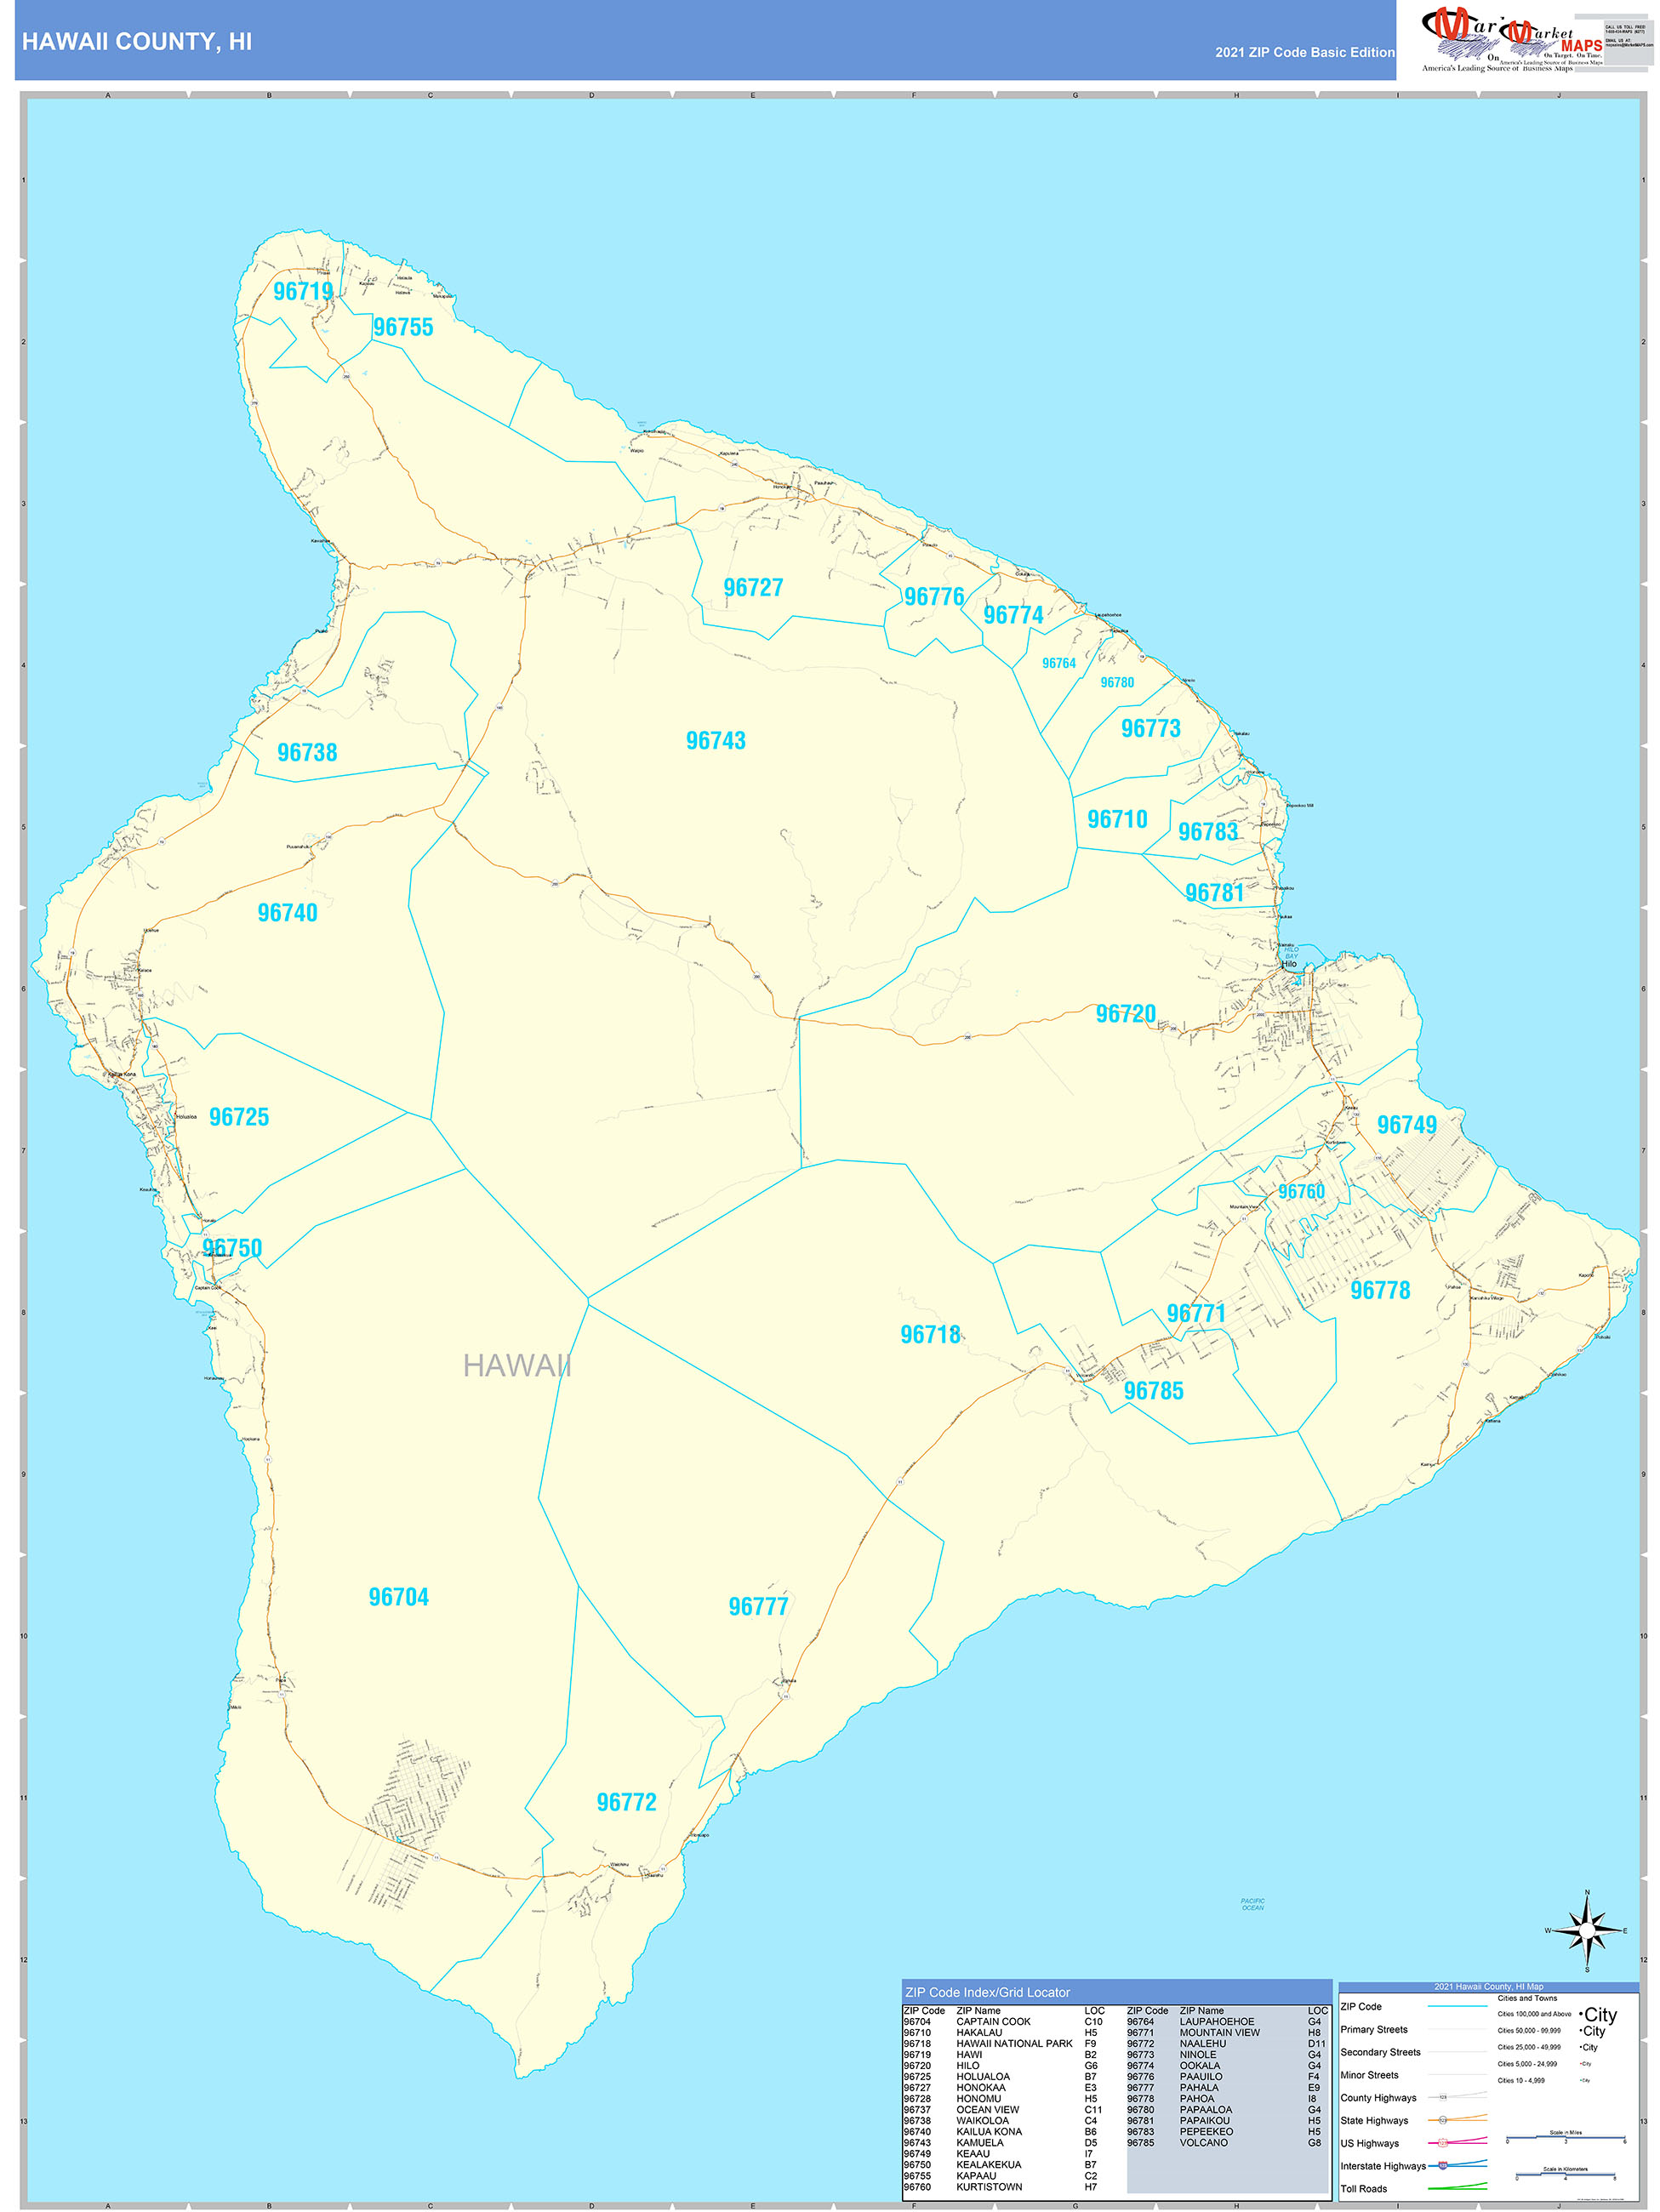 Hawaii County, HI Zip Code Wall Map Basic Style by MarketMAPS - MapSales